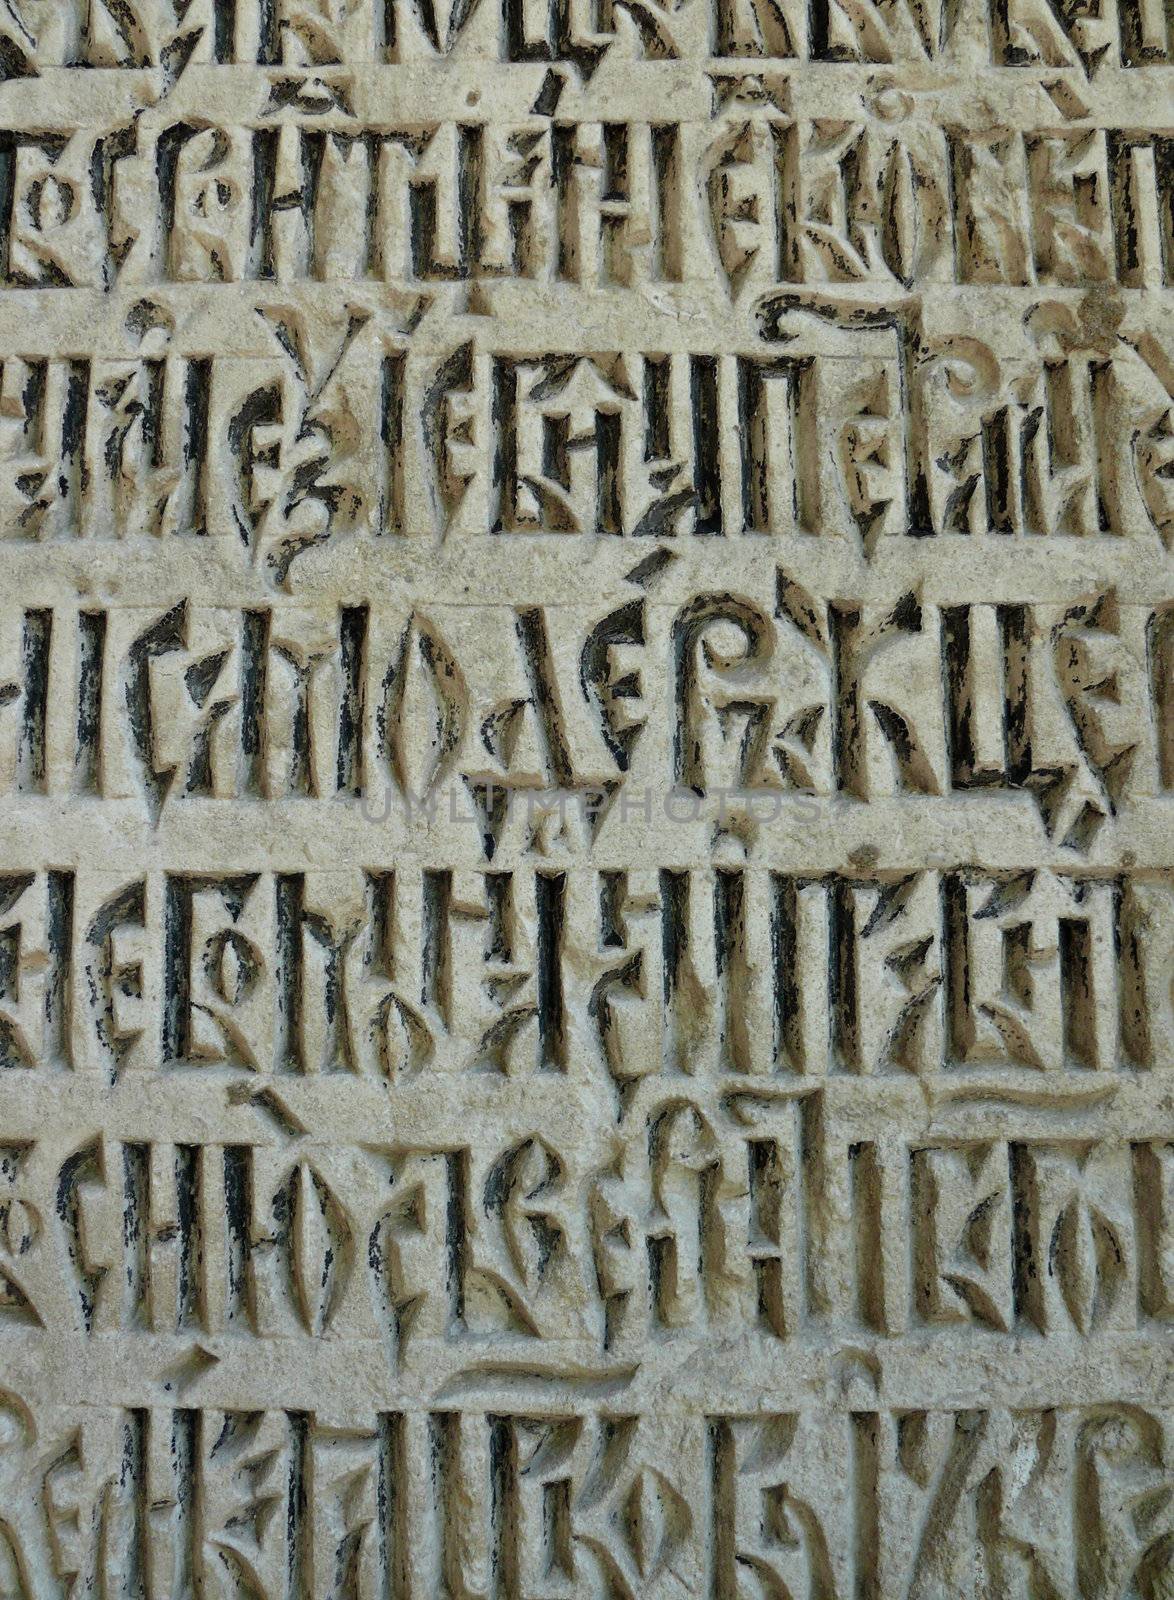 Scriptures in cyrillic alphabet by Stoyanov